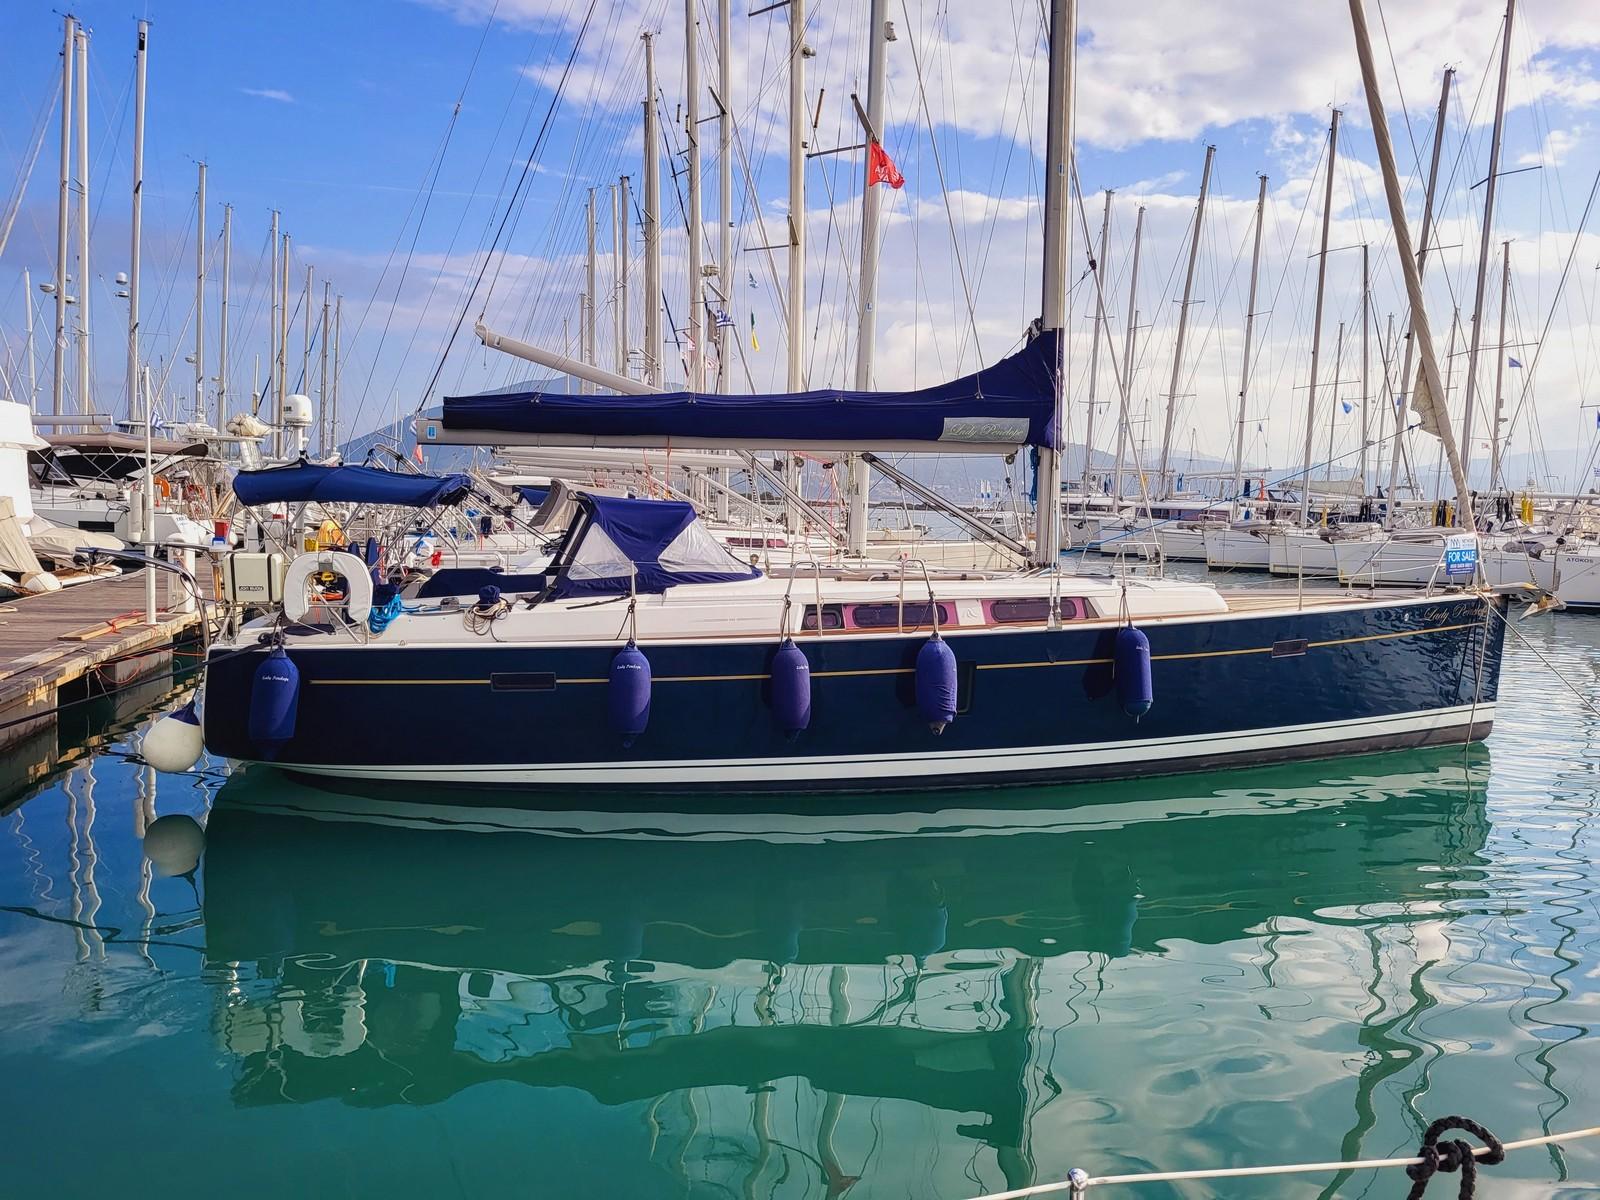 Hanse 445 2011 Cruising Yacht For Sale in Lefkas,Greece - £165,000